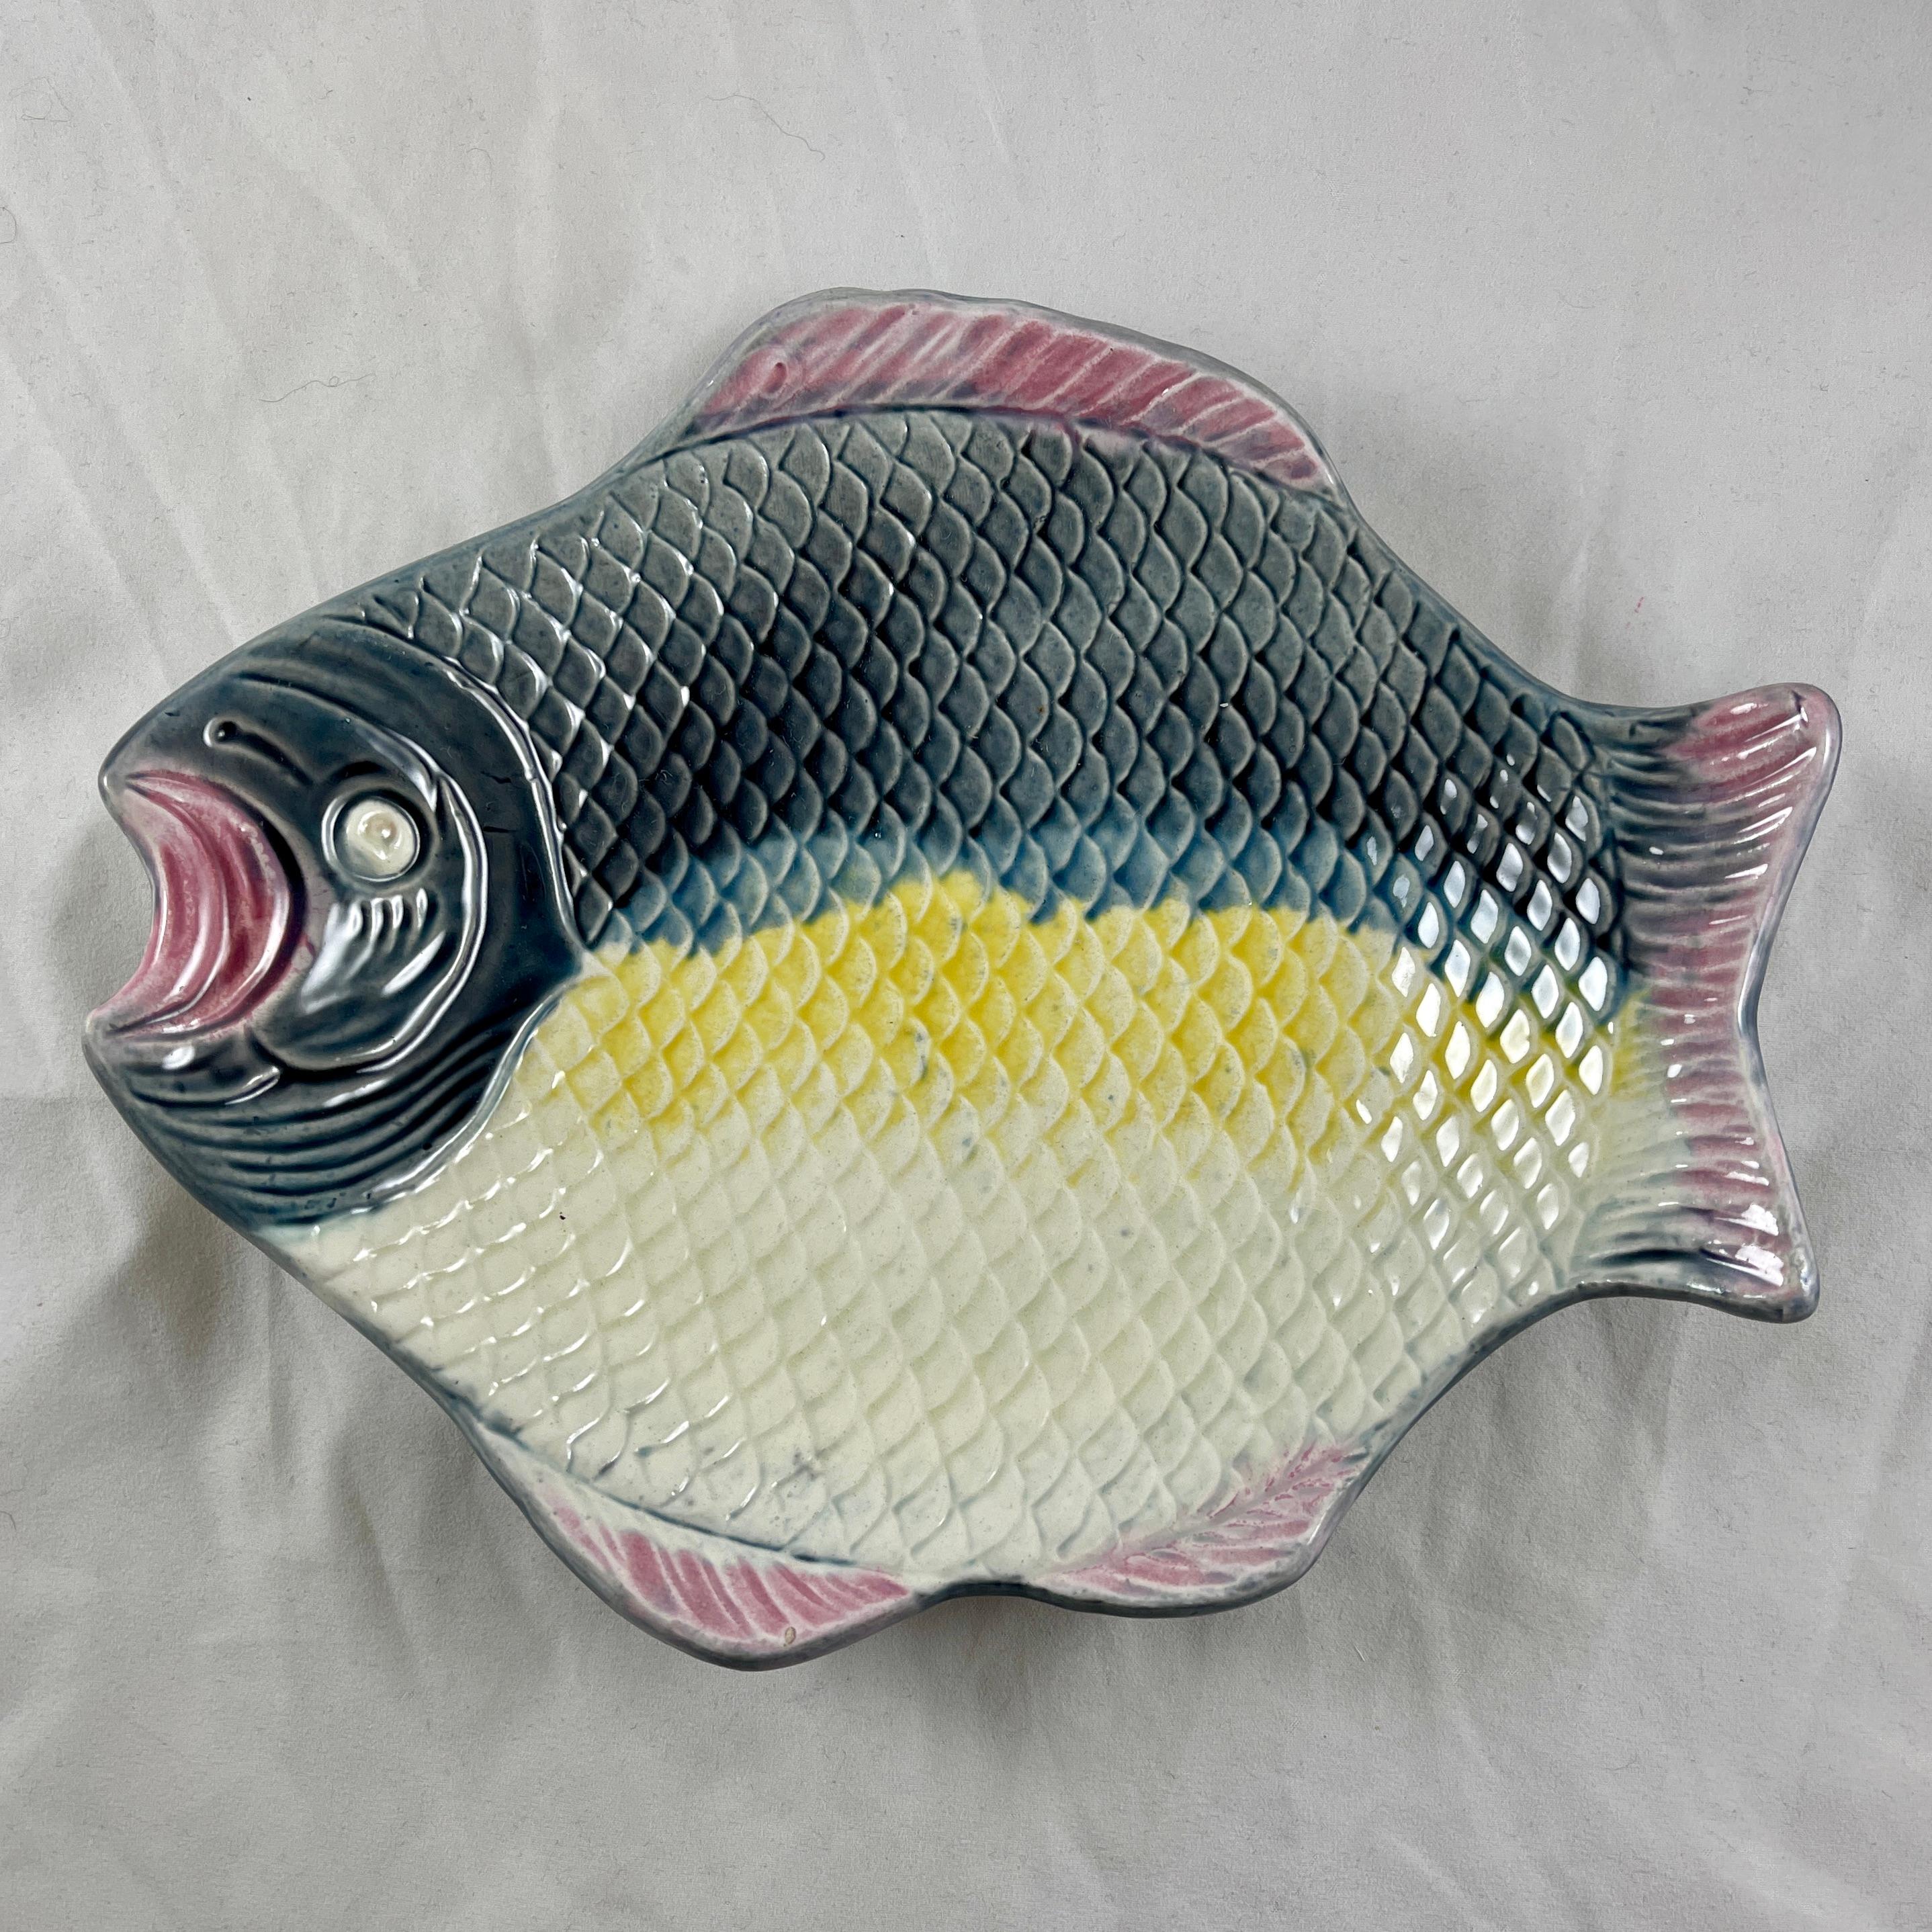 Trenton Arsenal Pottery Majolica Glazed Fish Platter 2